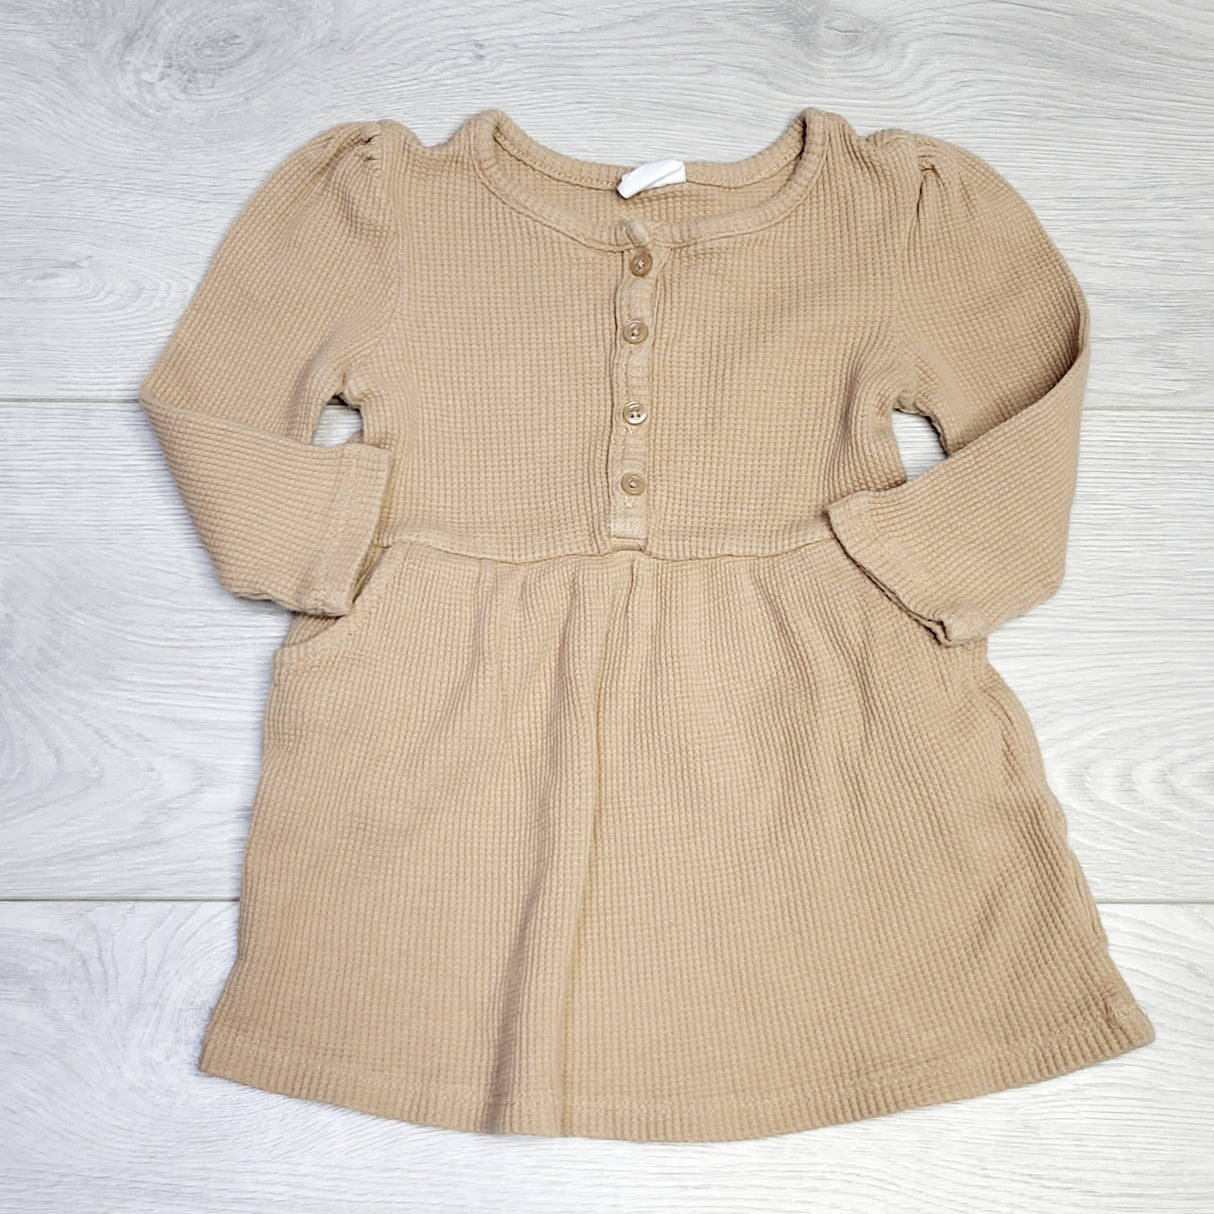 KJHN1 - Gap tan waffle knit dress. Size 18-24 months